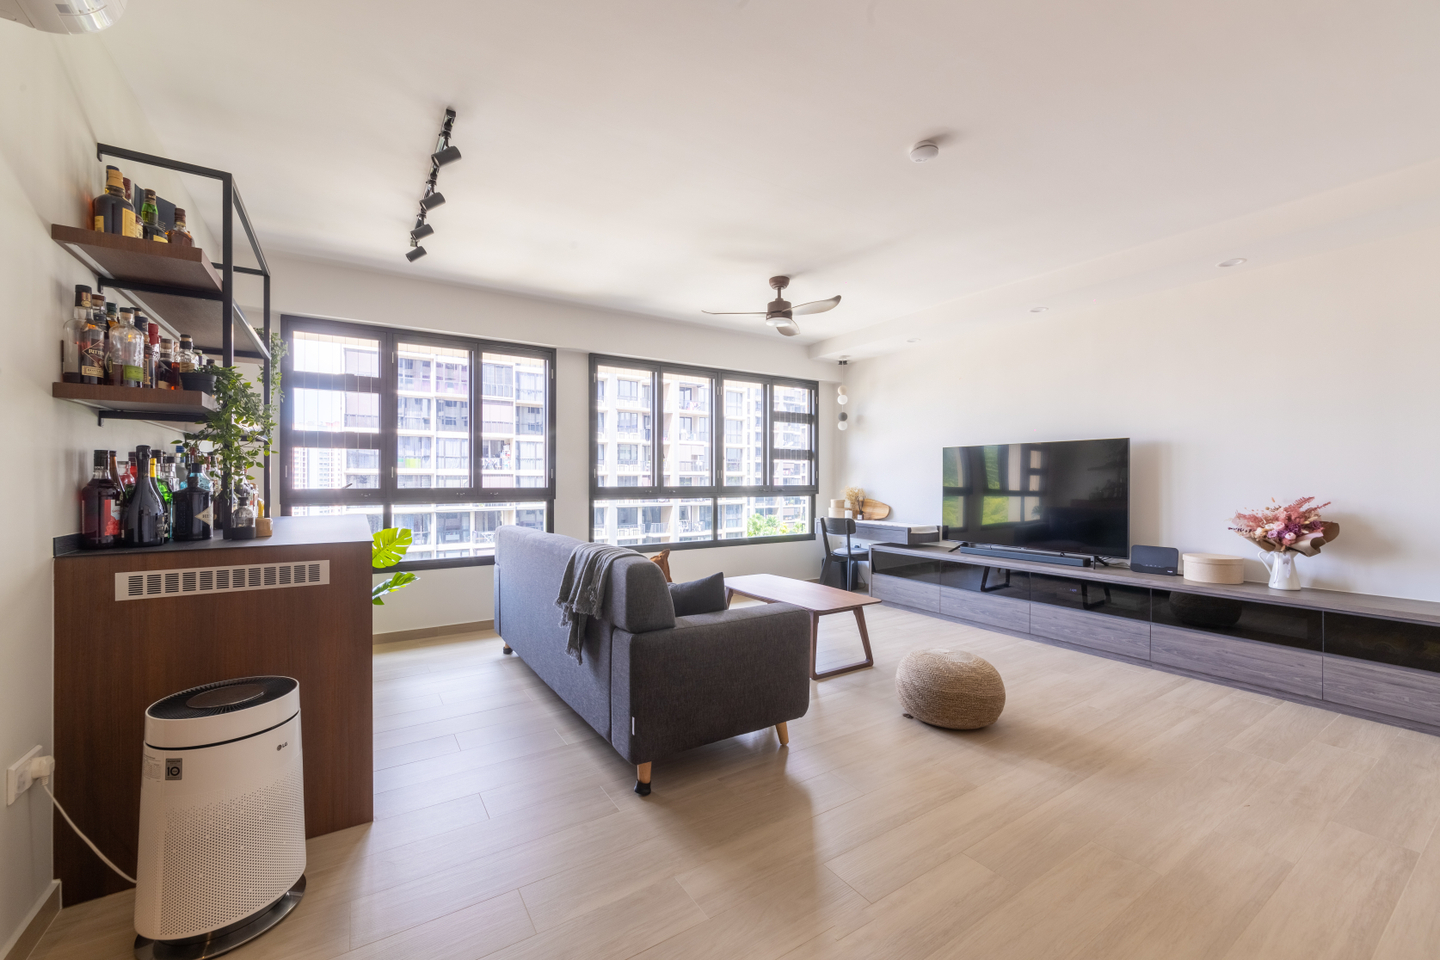 Spacious Living Room With Minimal Interior Design - Livspace